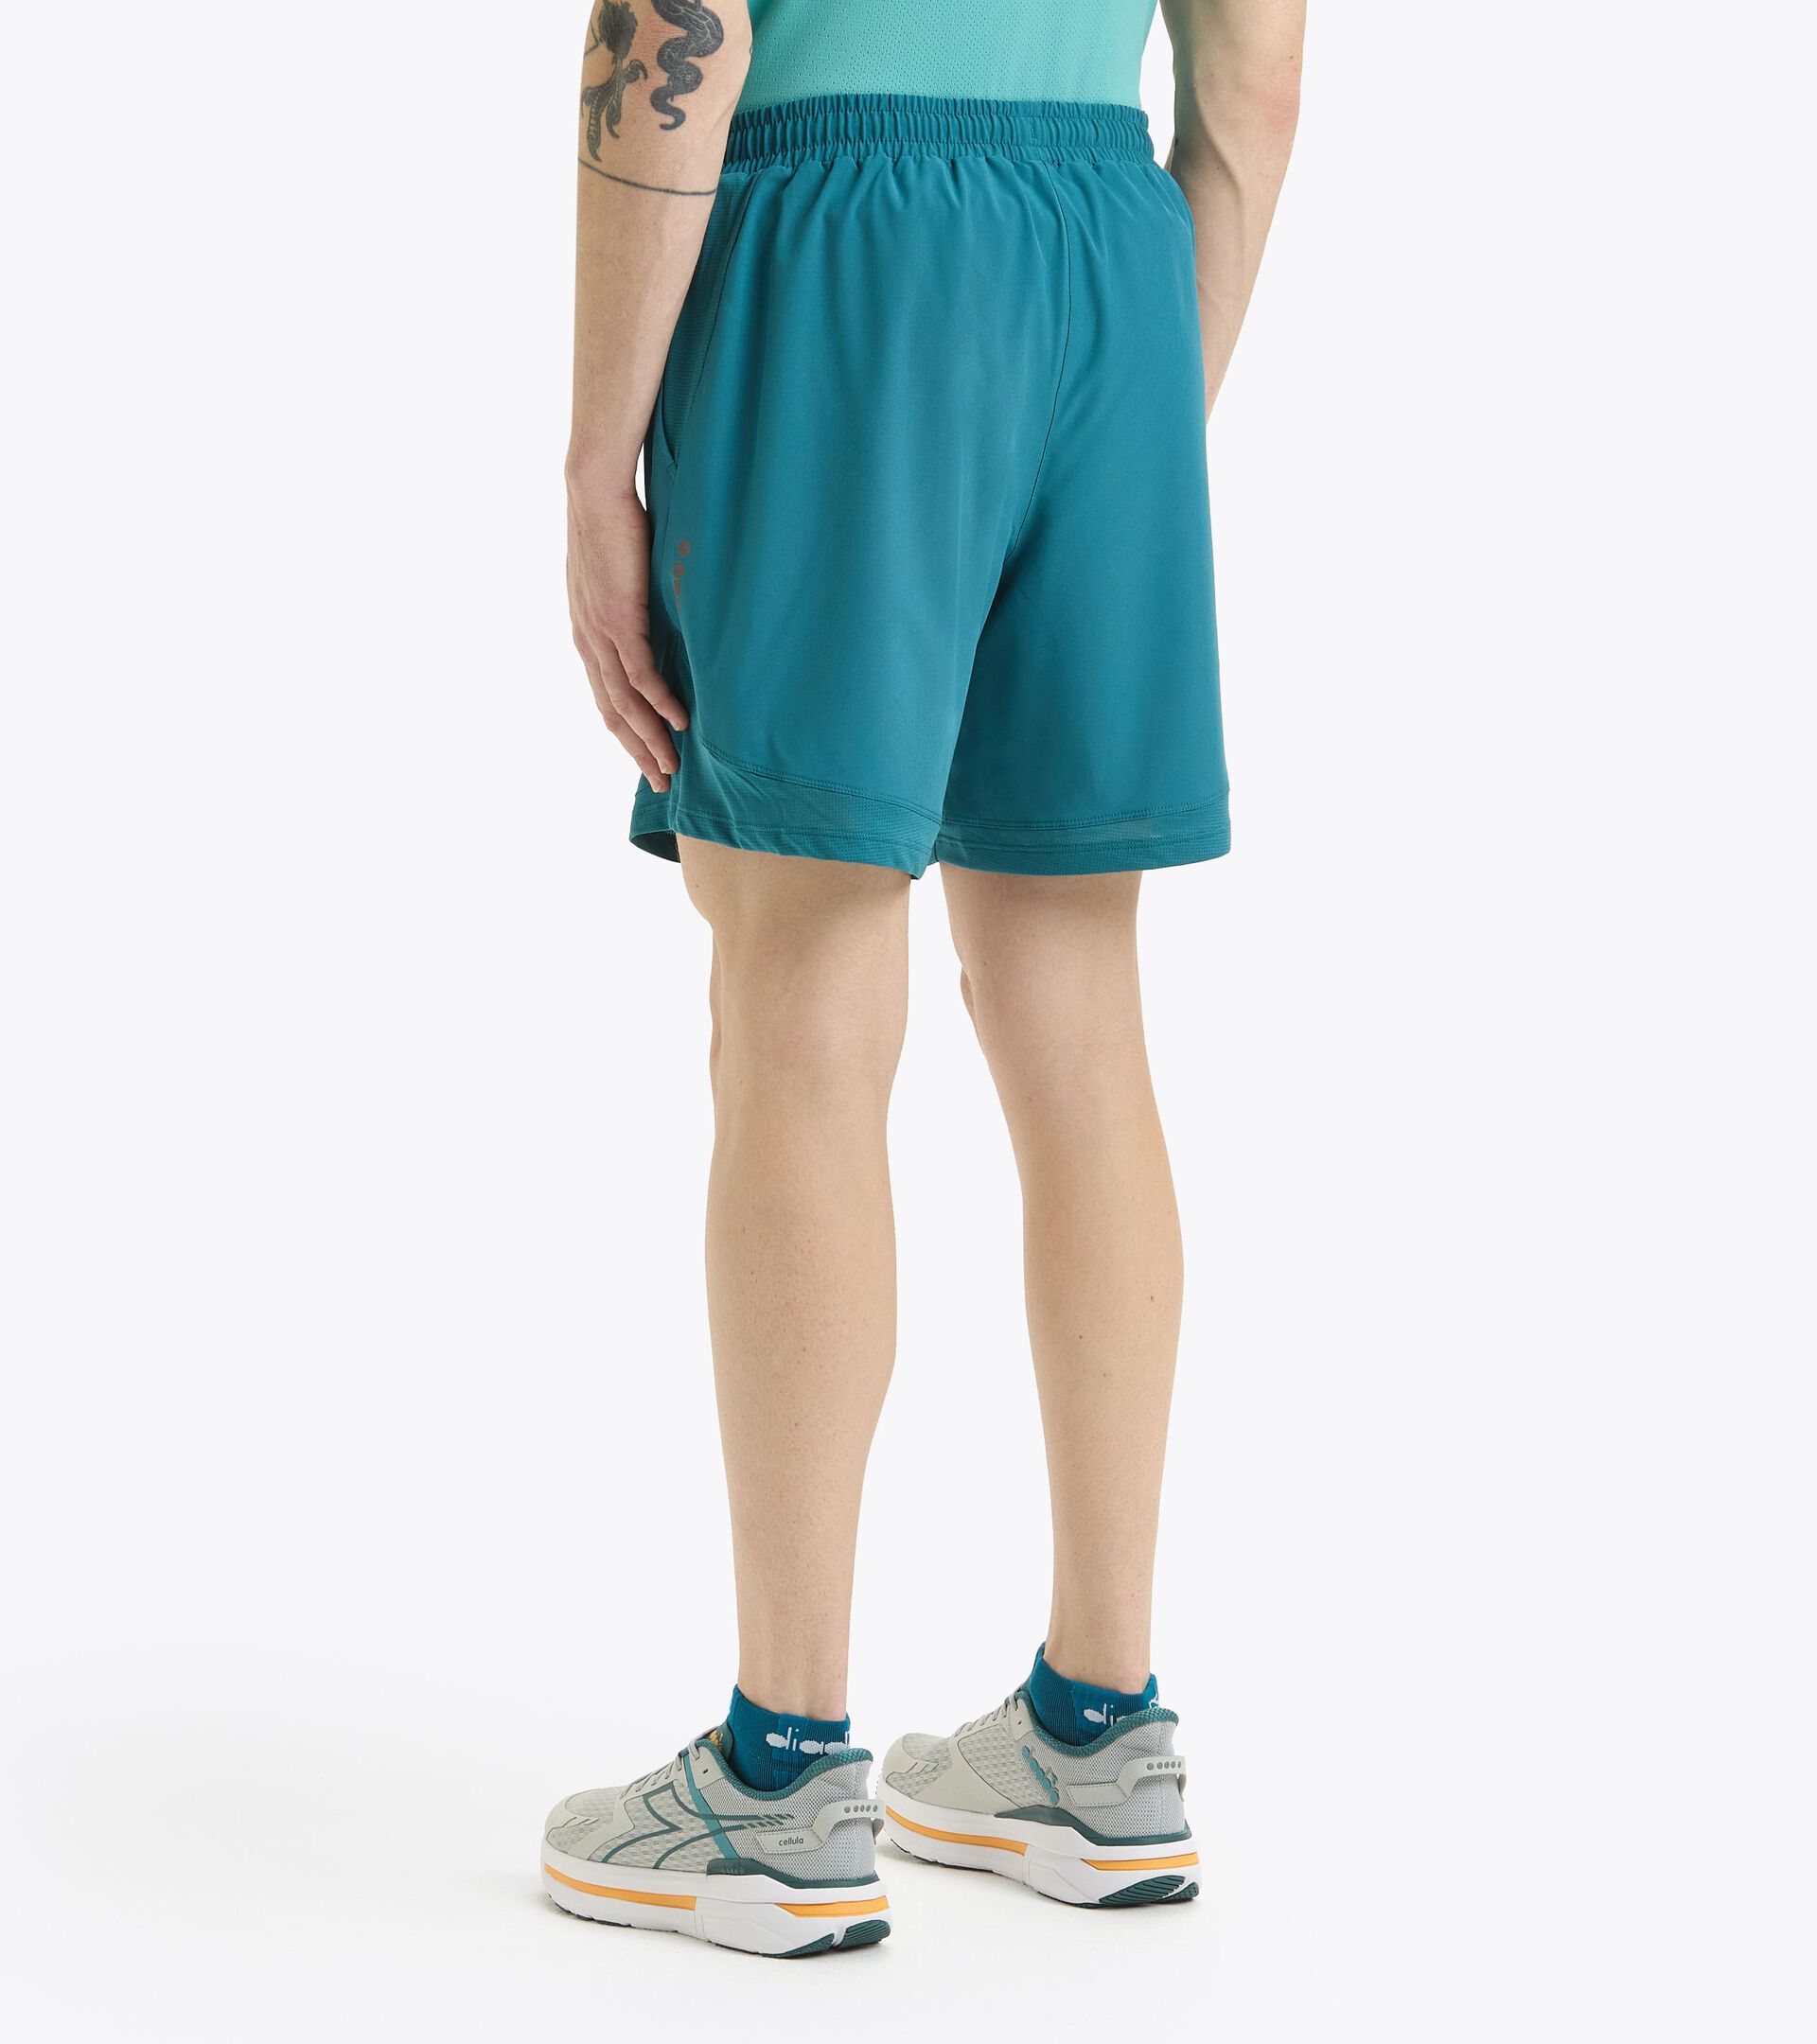 7’’ running shorts - Light fabric - Men’s SHORTS RUN 7'' COLONIAL BLUE - Diadora